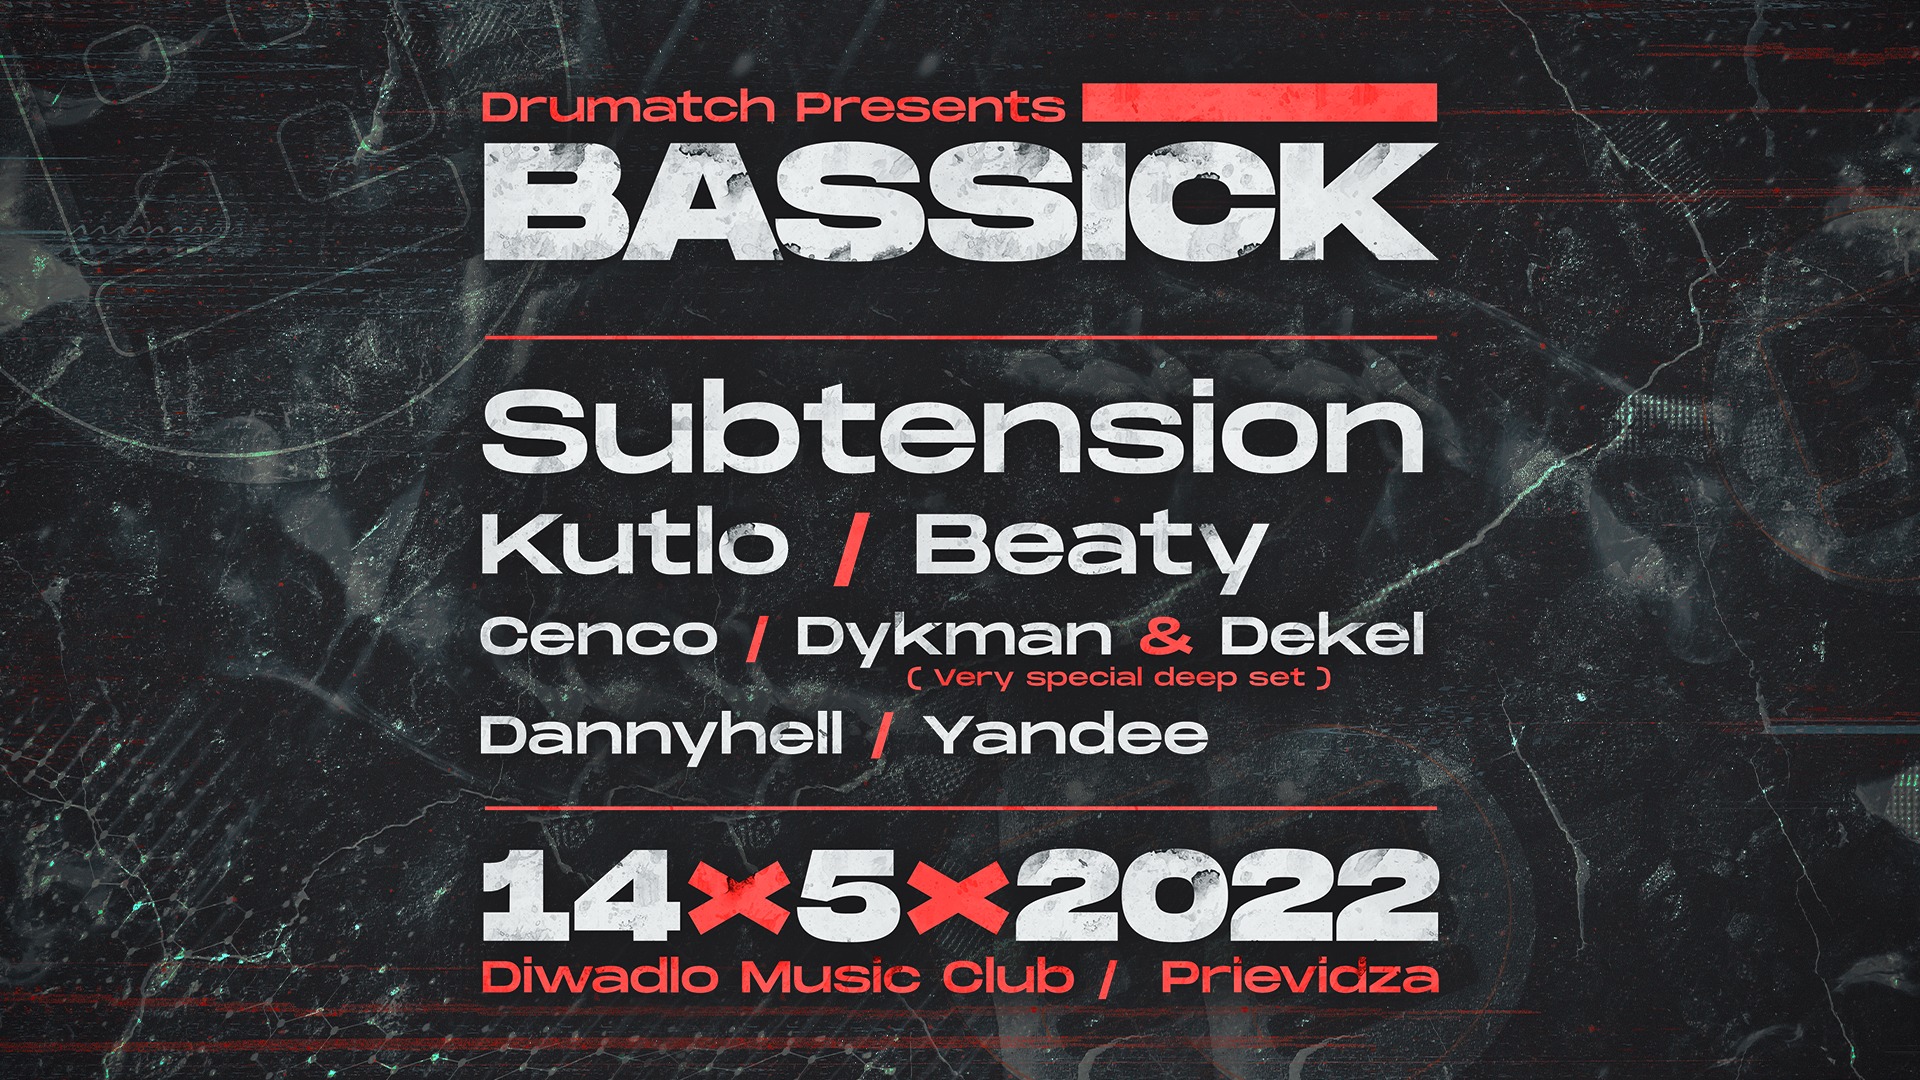 Drumatch Presents: BASSICK / 14.5.2022 / Diwadlo Music Club / Prievidza